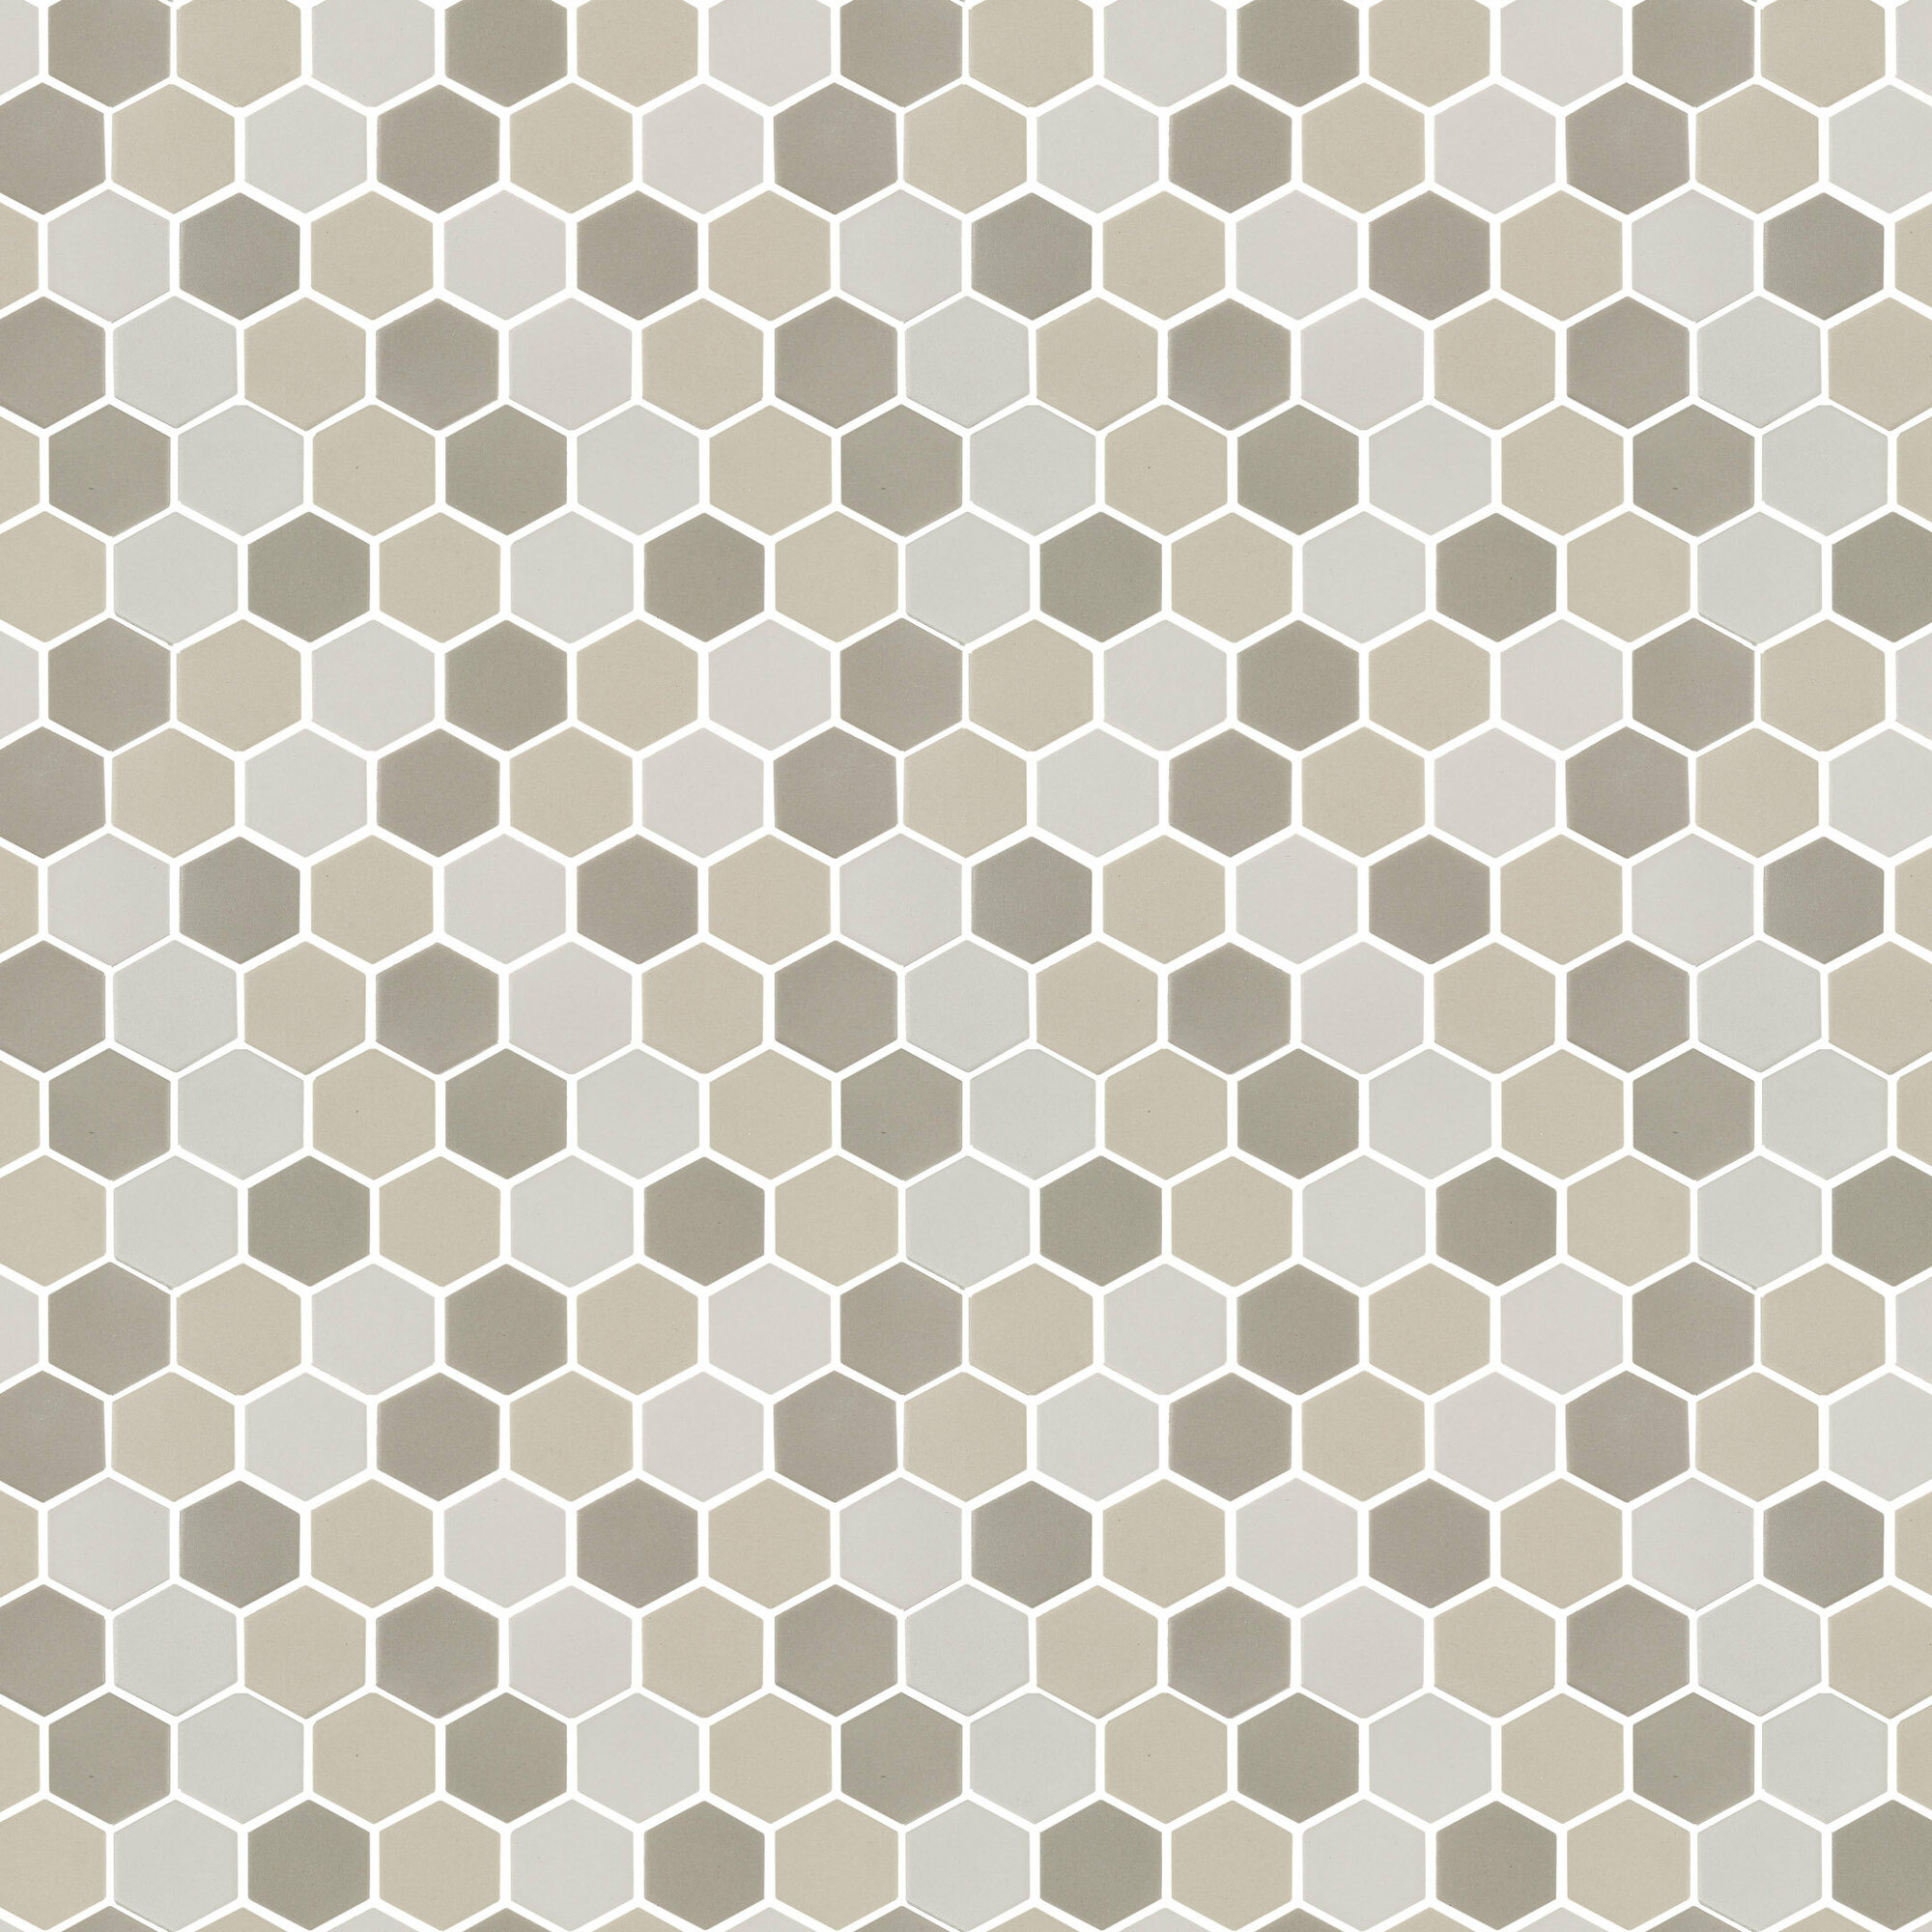 Мозаика Starmosaic Hexagon small LB Mix Antid бежевая керамическая 325х282х6 мм - фотография № 8